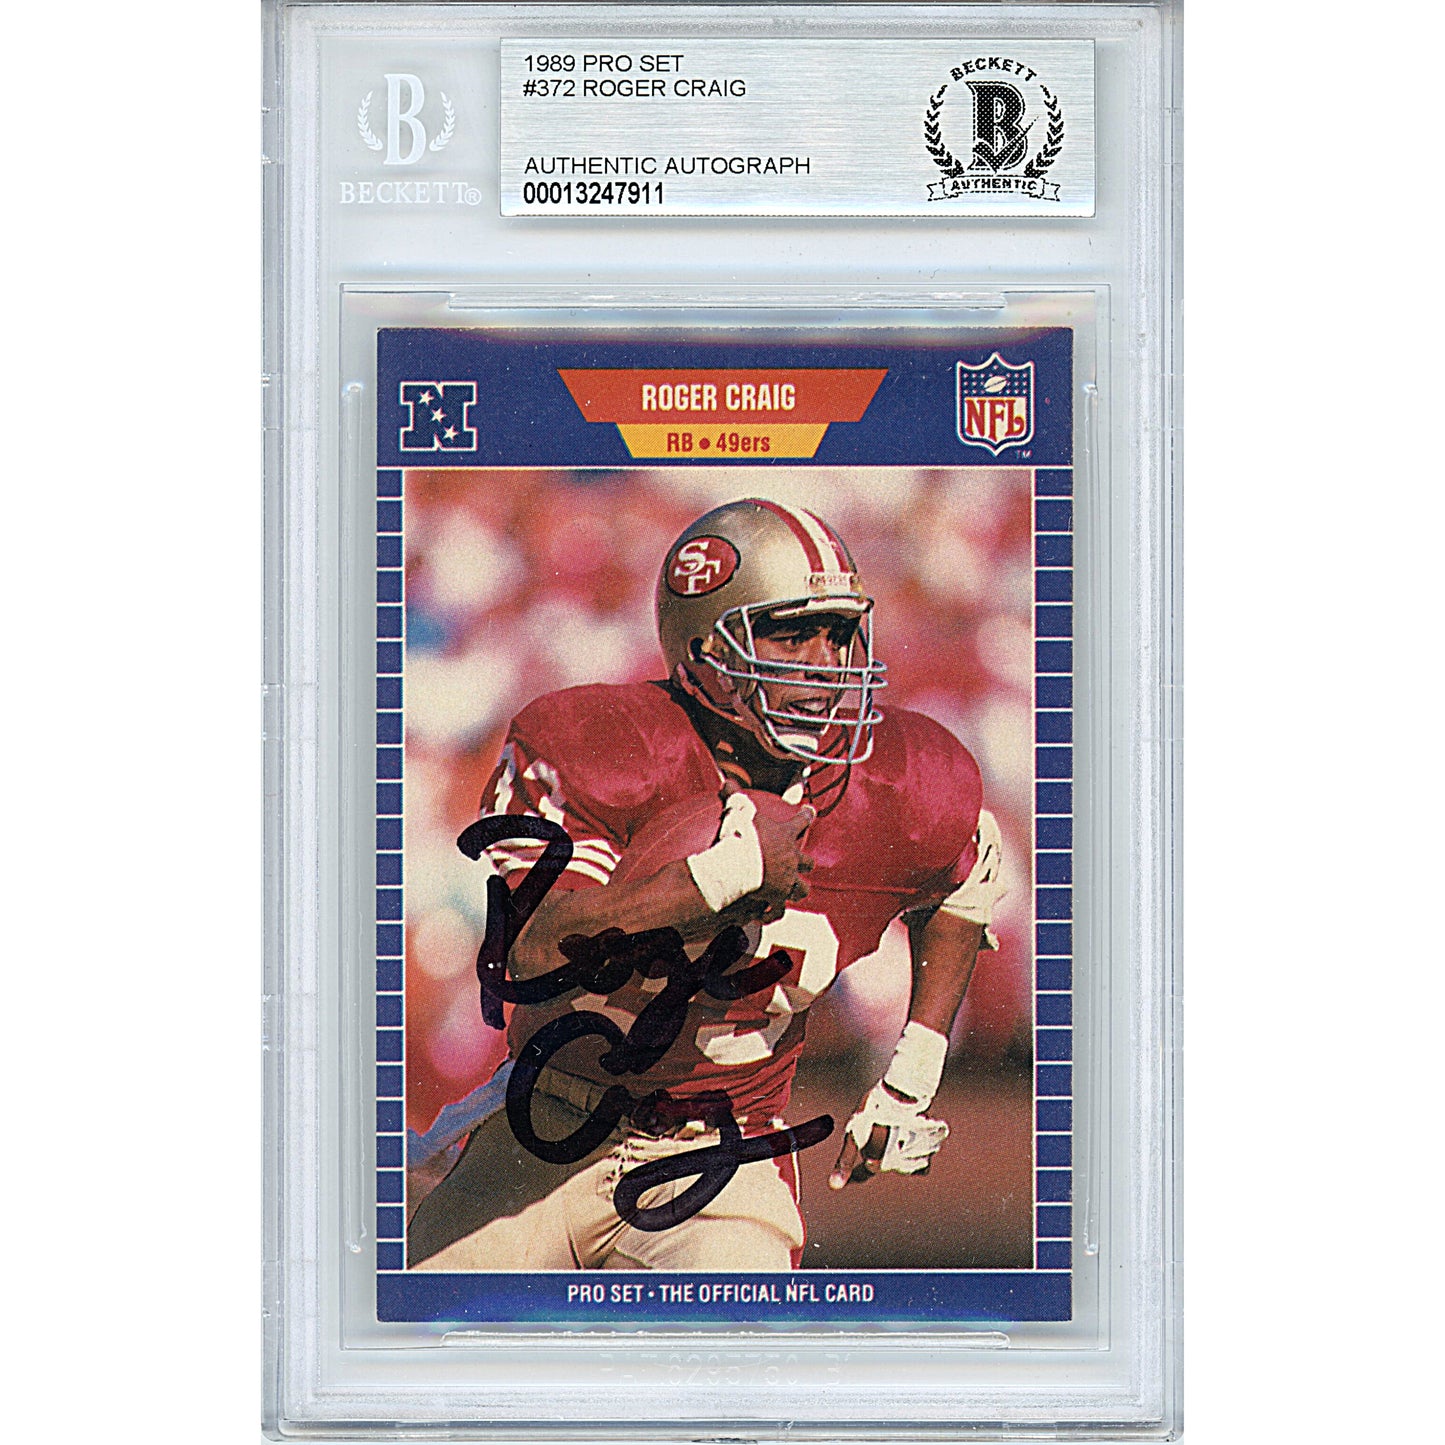 Footballs- Autographed- Roger Craig Signed San Francisco 49ers 1989 Pro Set Football Card Beckett BAS Authenticated Slabbed 00013247911 - 101